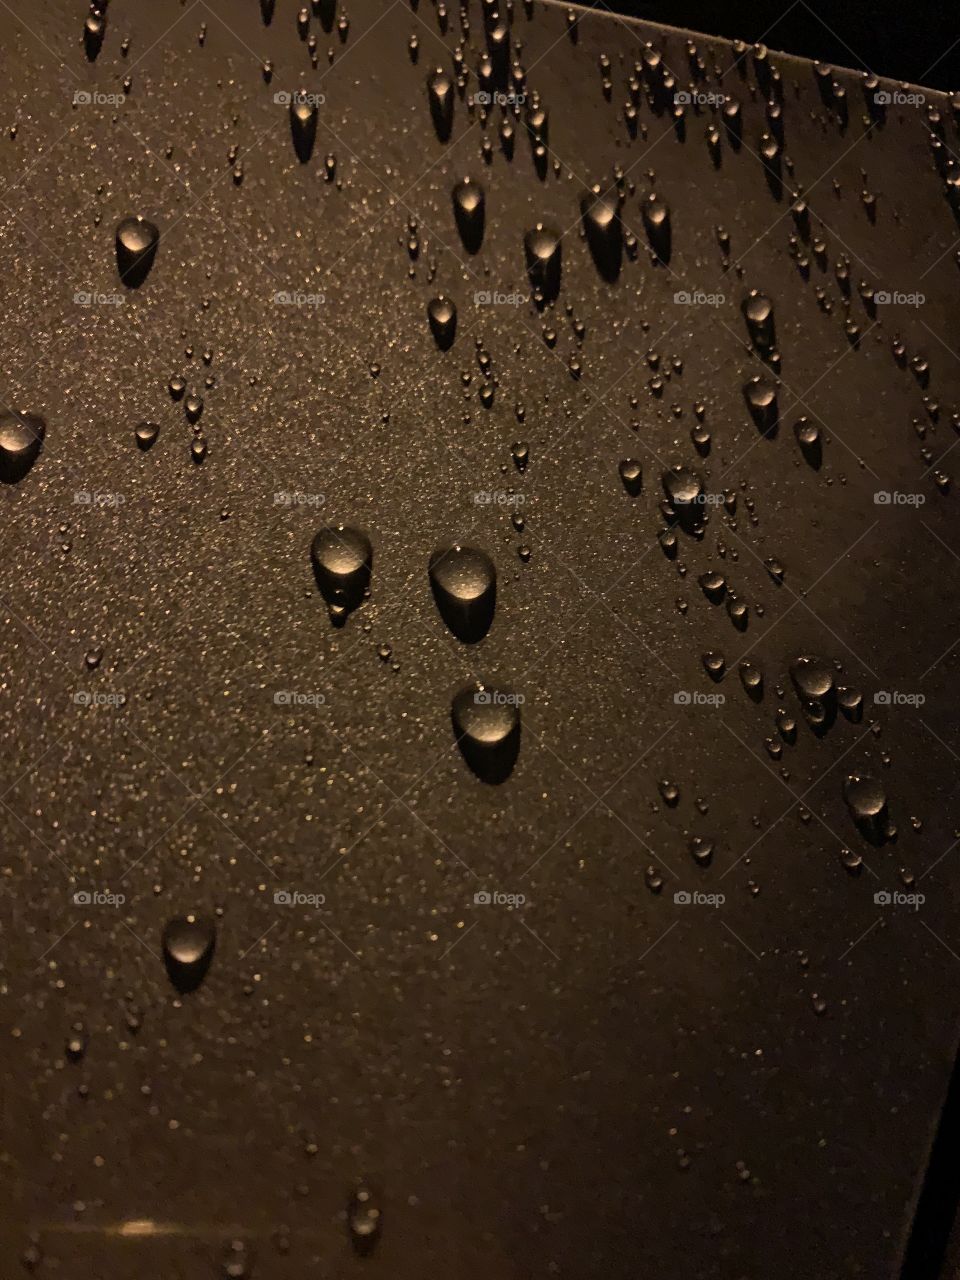 More Rain Droplets on Car